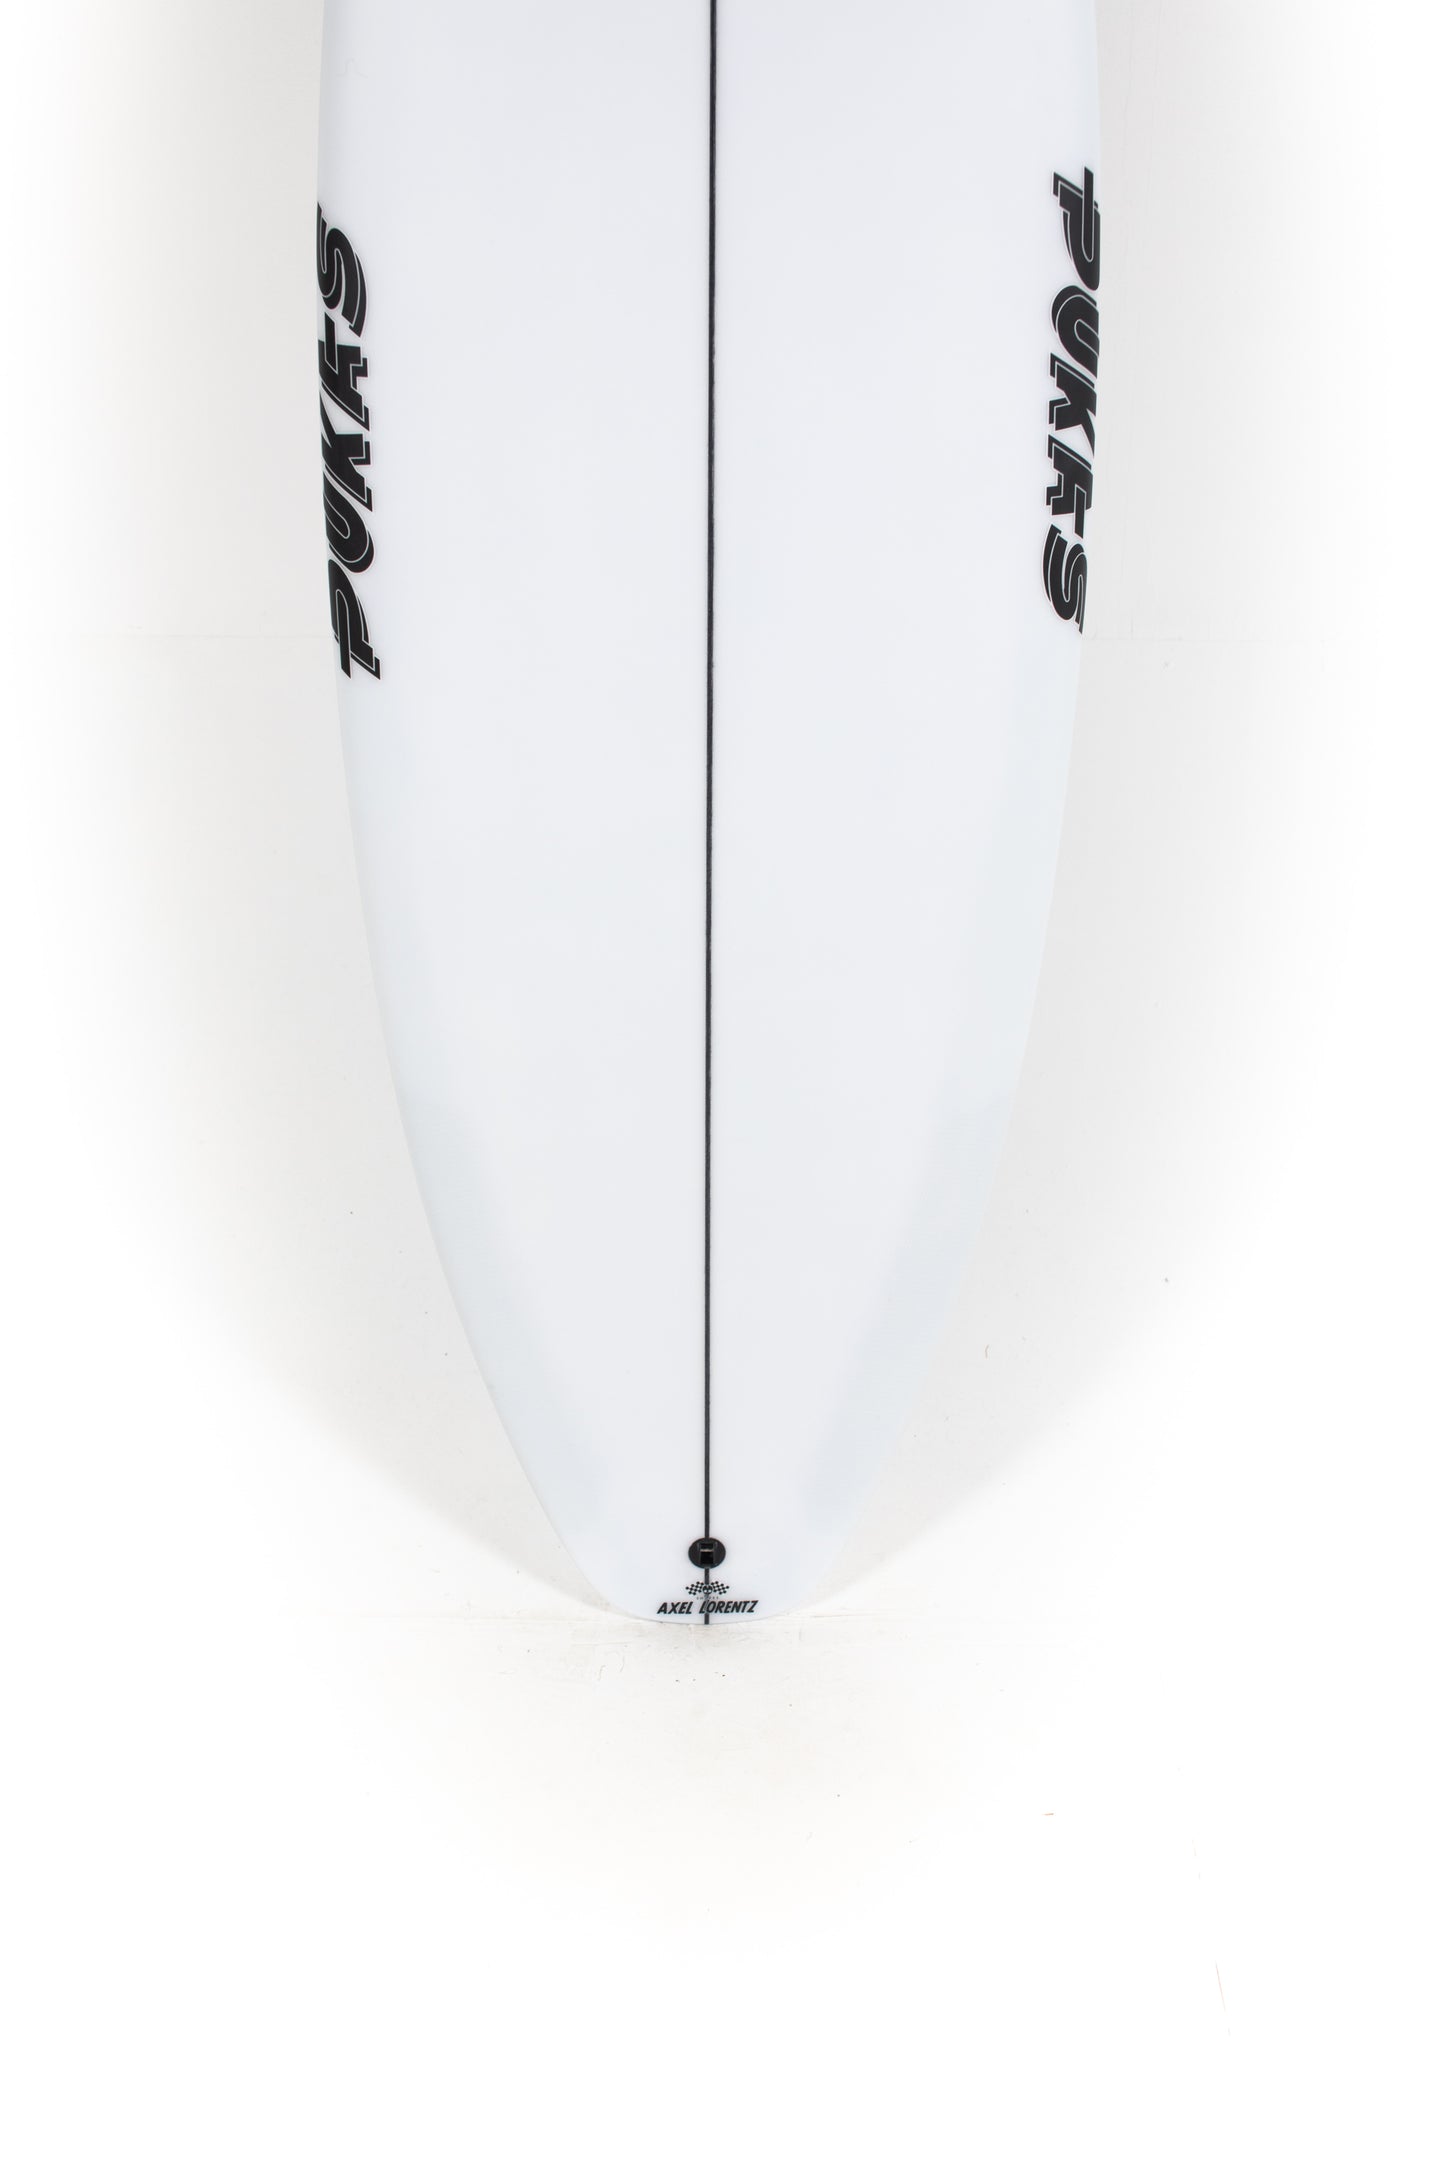 
                  
                    Pukas Surf Shop - Pukas Surfboard - TASTY TREAT ALL ROUND by Axel Lorentz - 5'9" x 19.25 x 2.4 x 28.01L - AX08530
                  
                